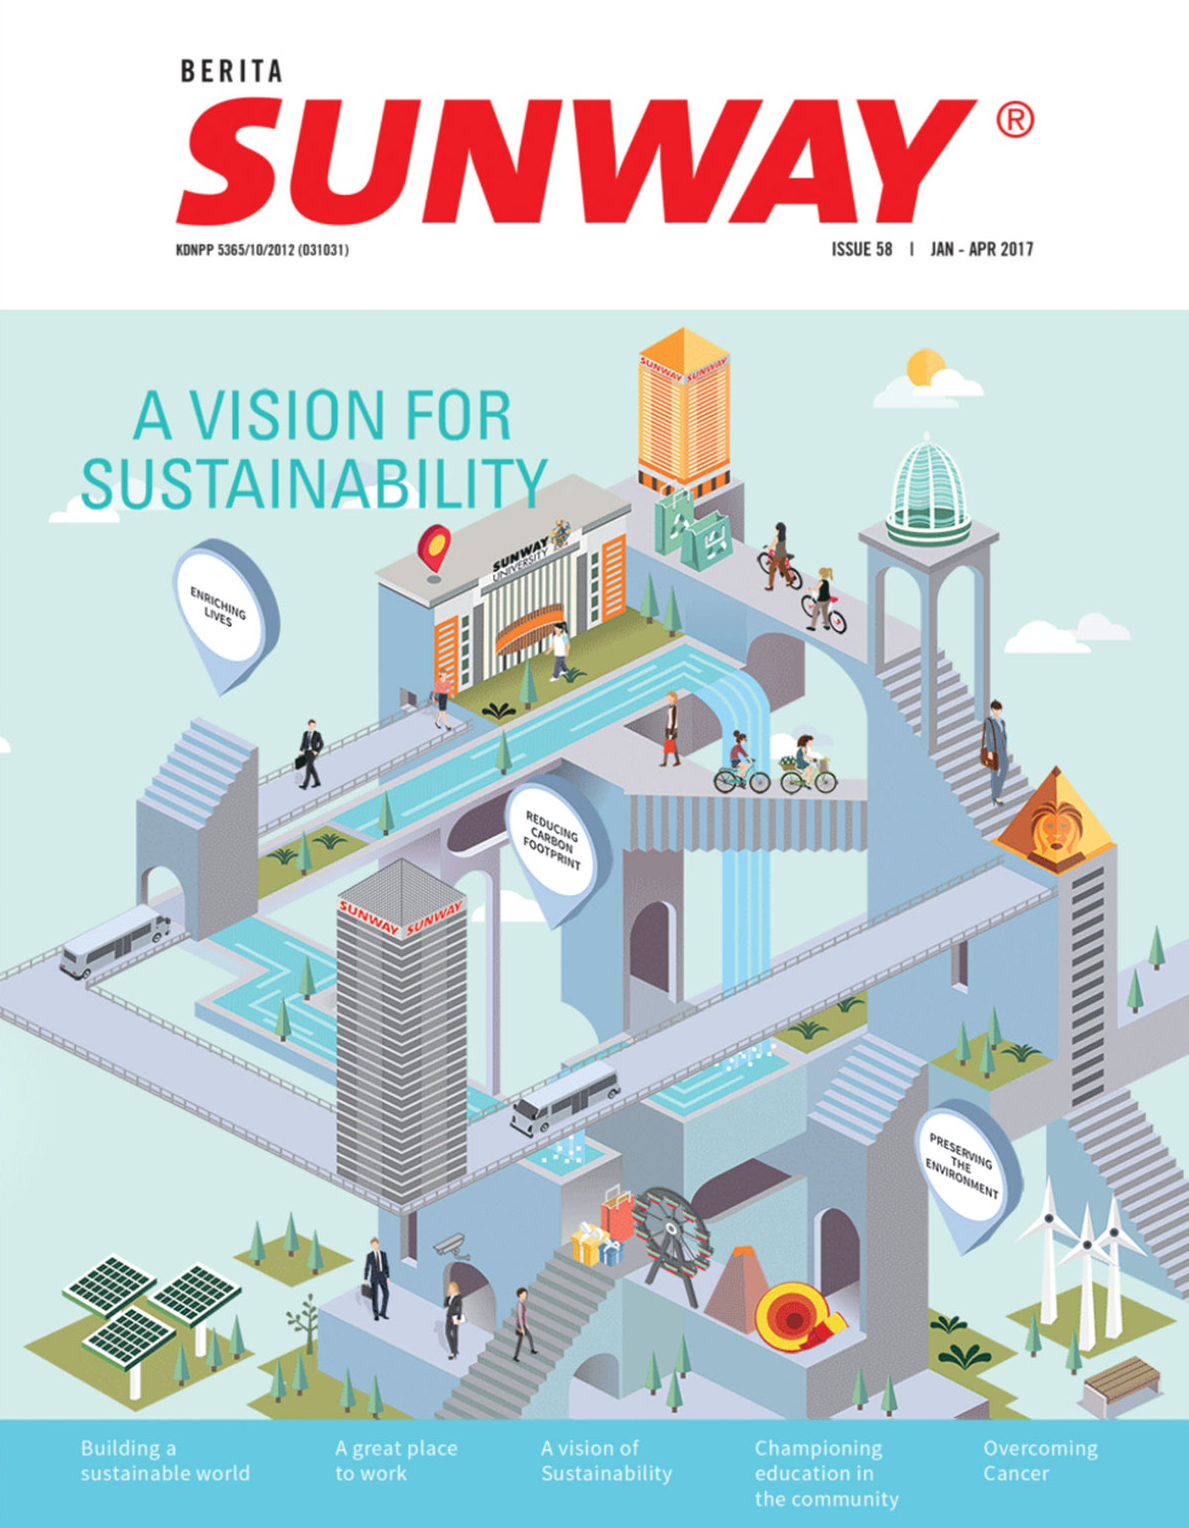 Berita Sunway Issue 58